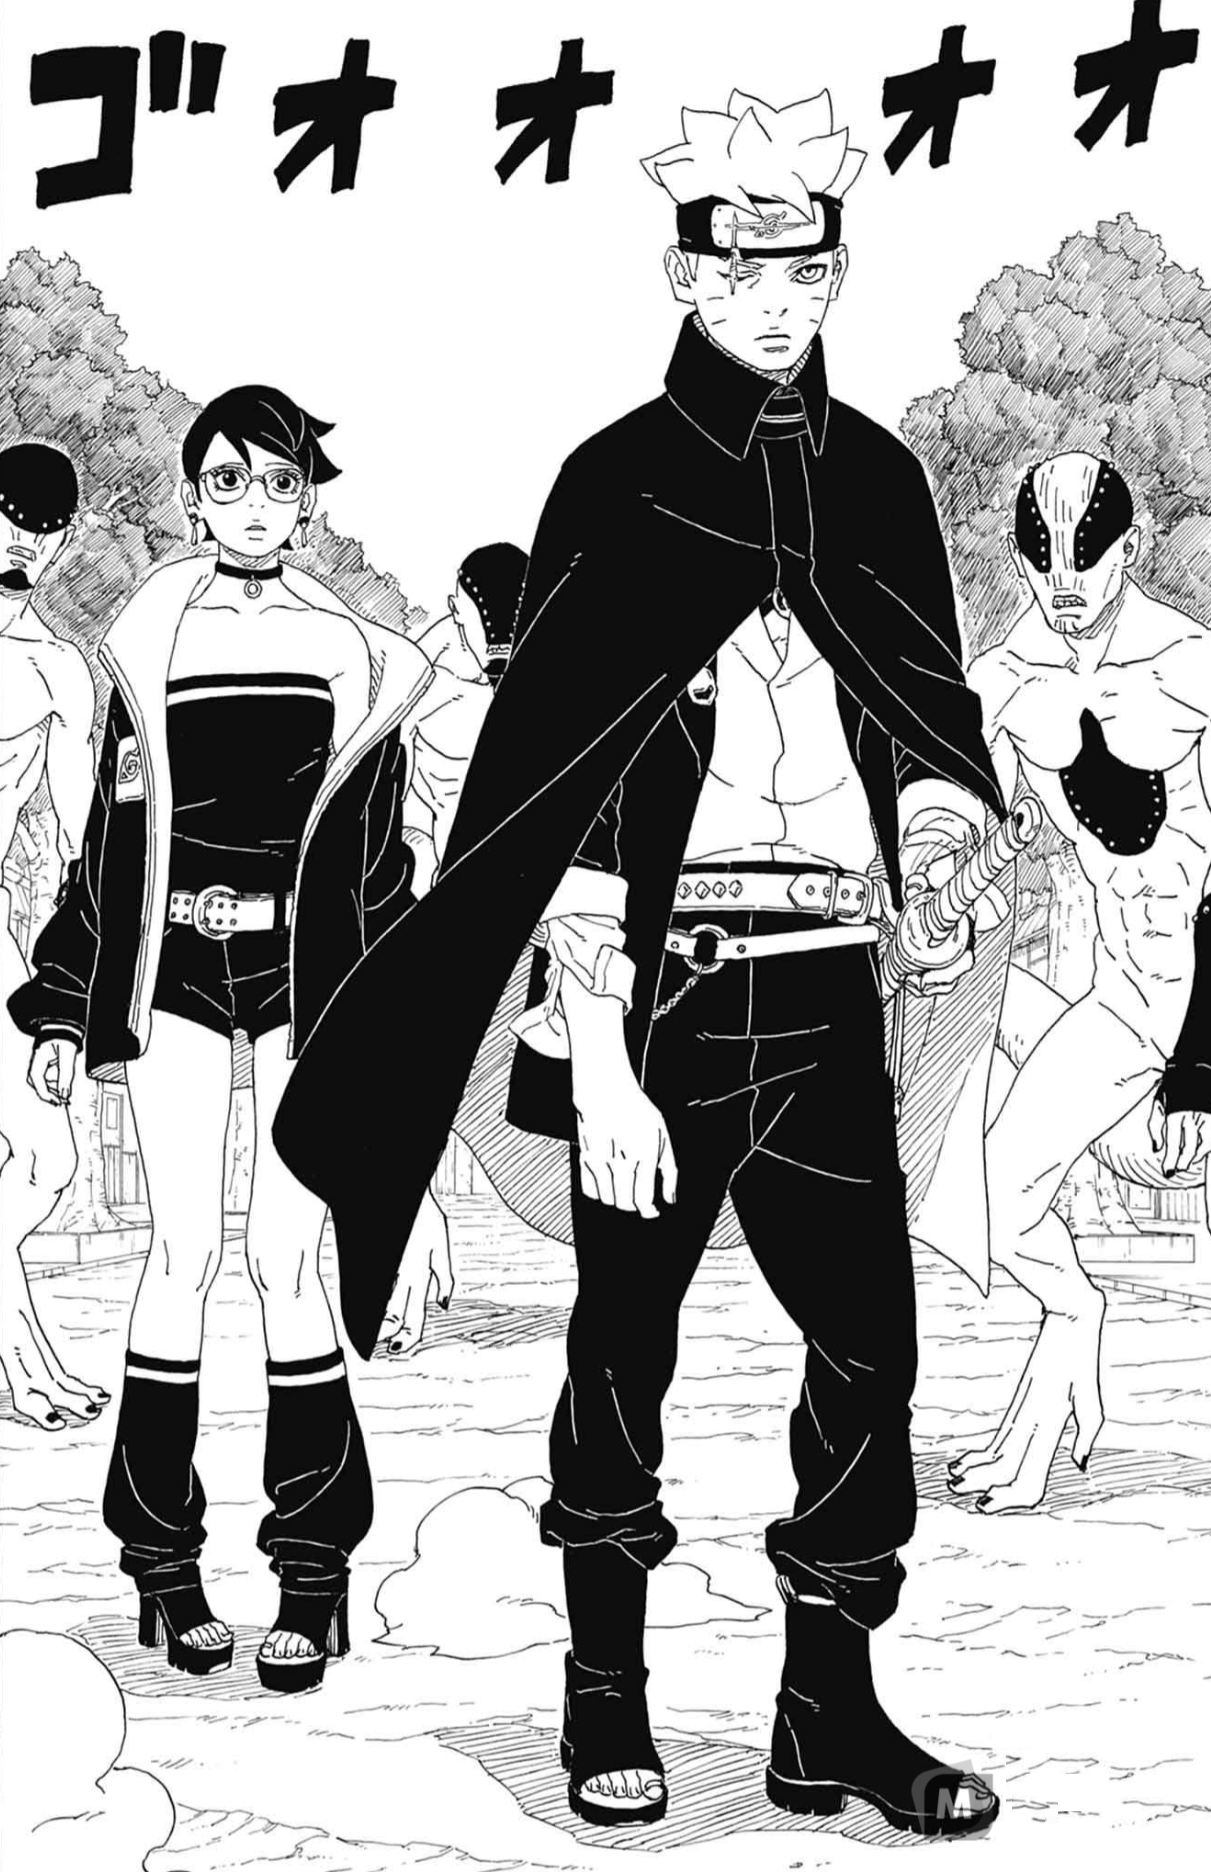 Boruto Time Skip Manga Panel by JUEGARODO on DeviantArt